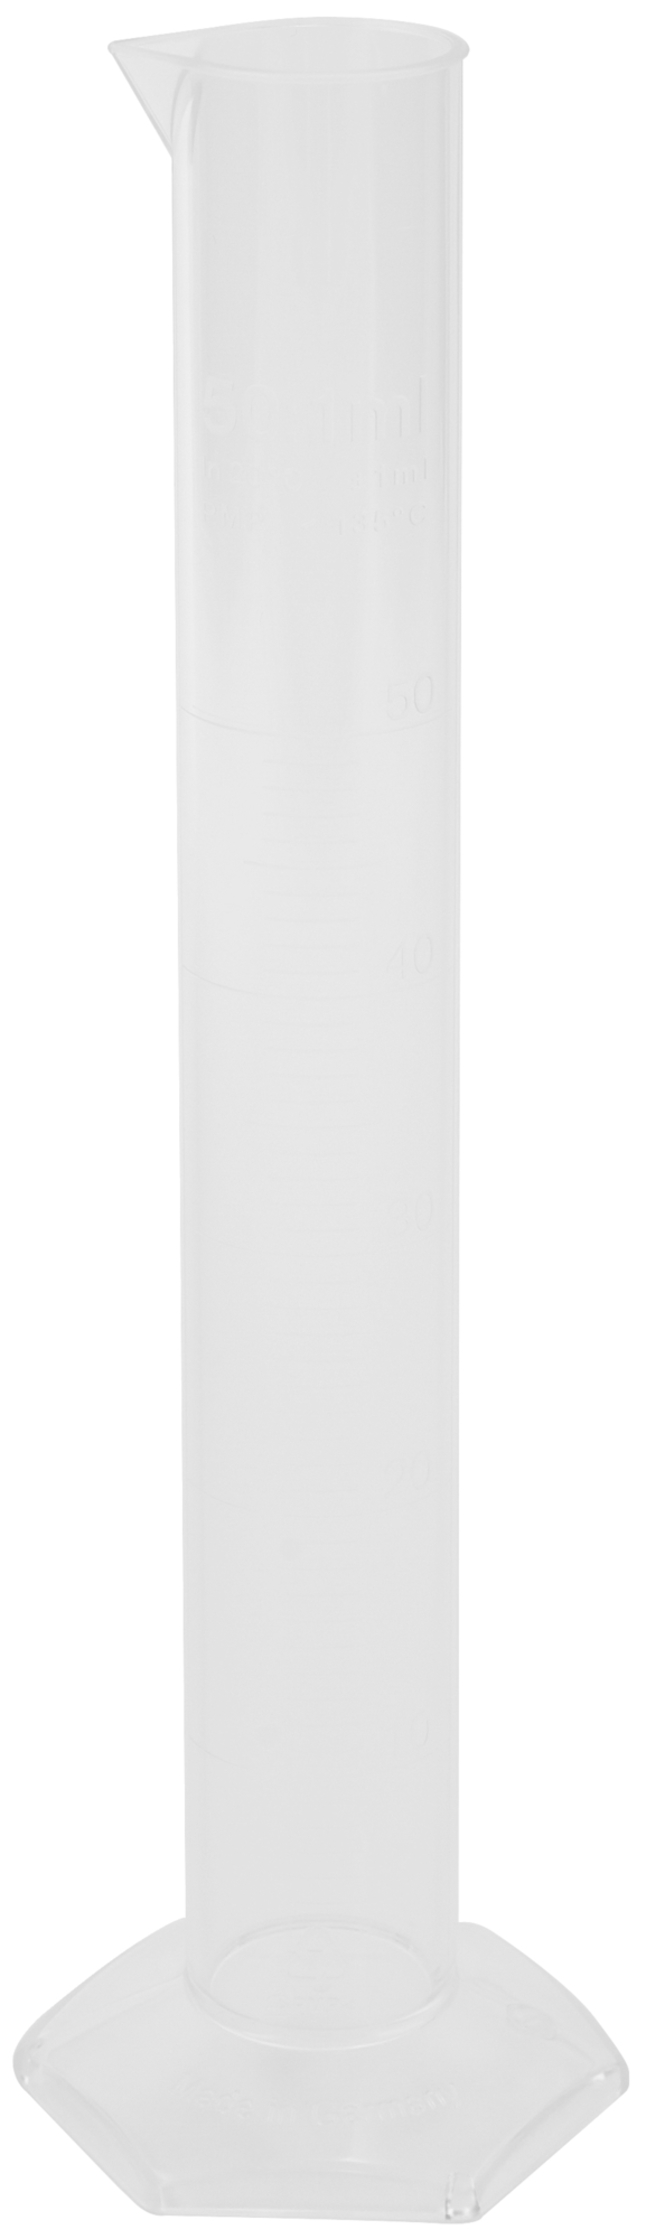 Cylinders, Item Number 594216